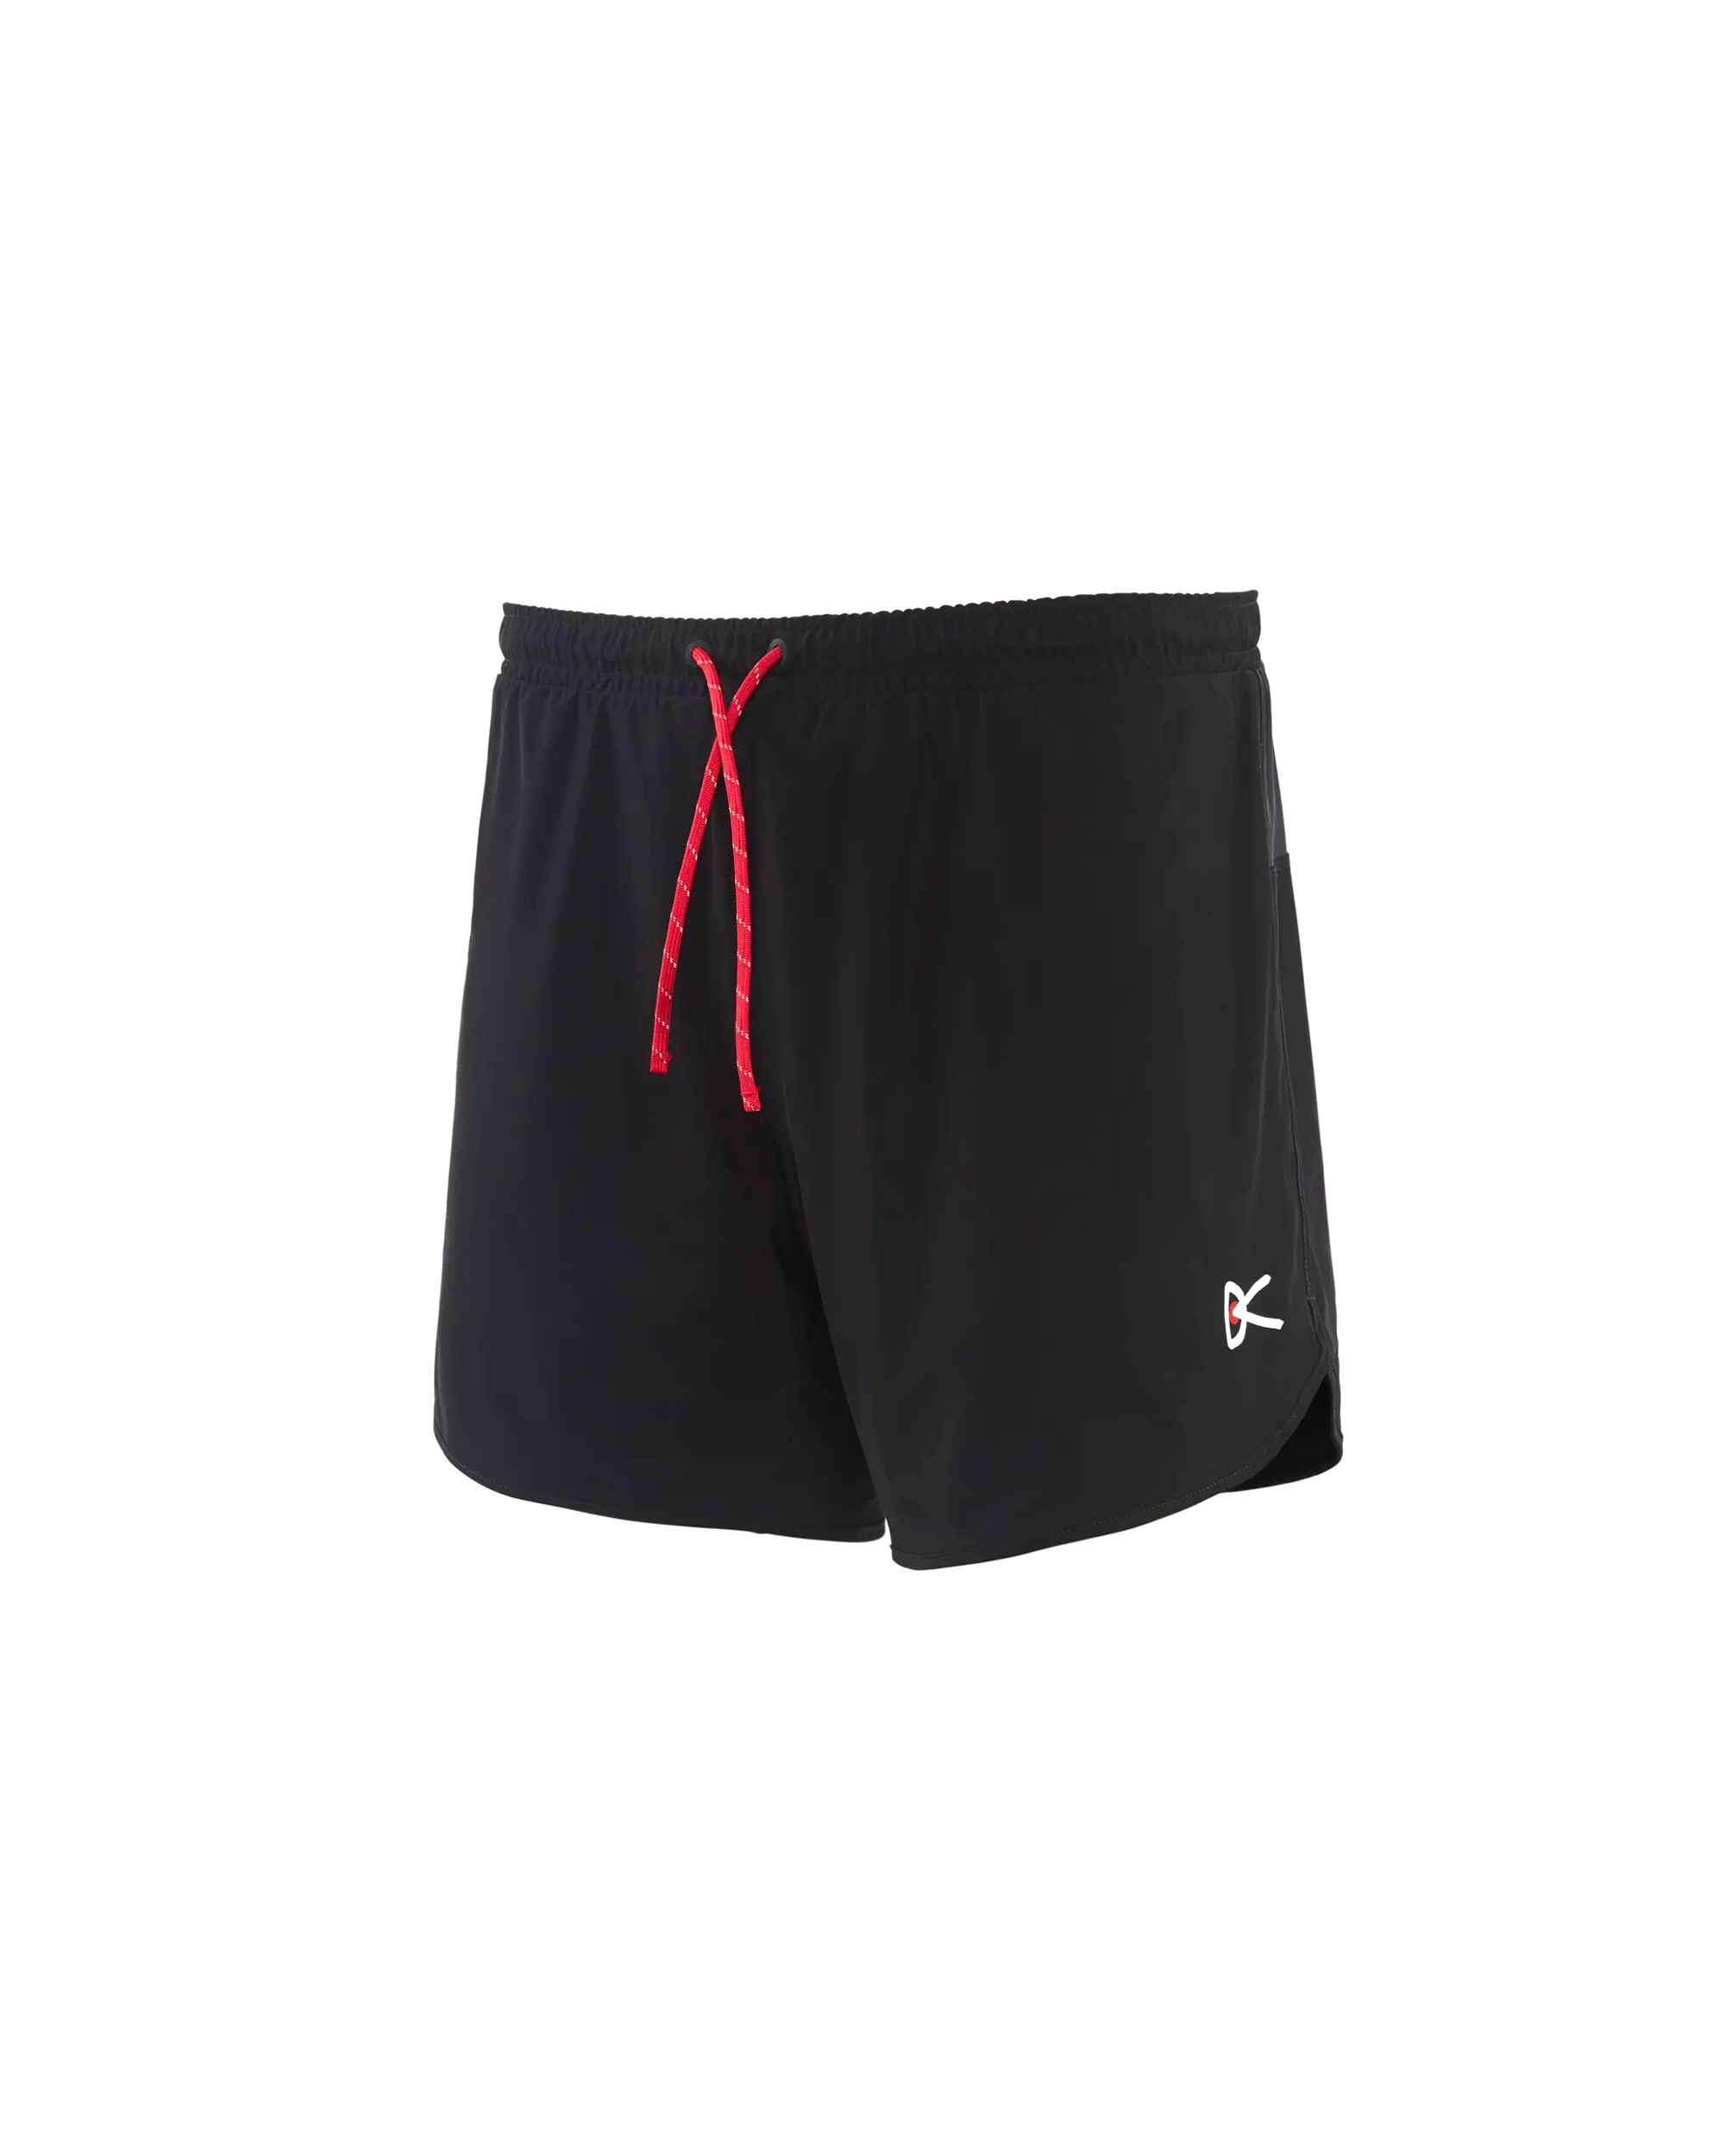 Spino 5" Training Shorts - Black / Red